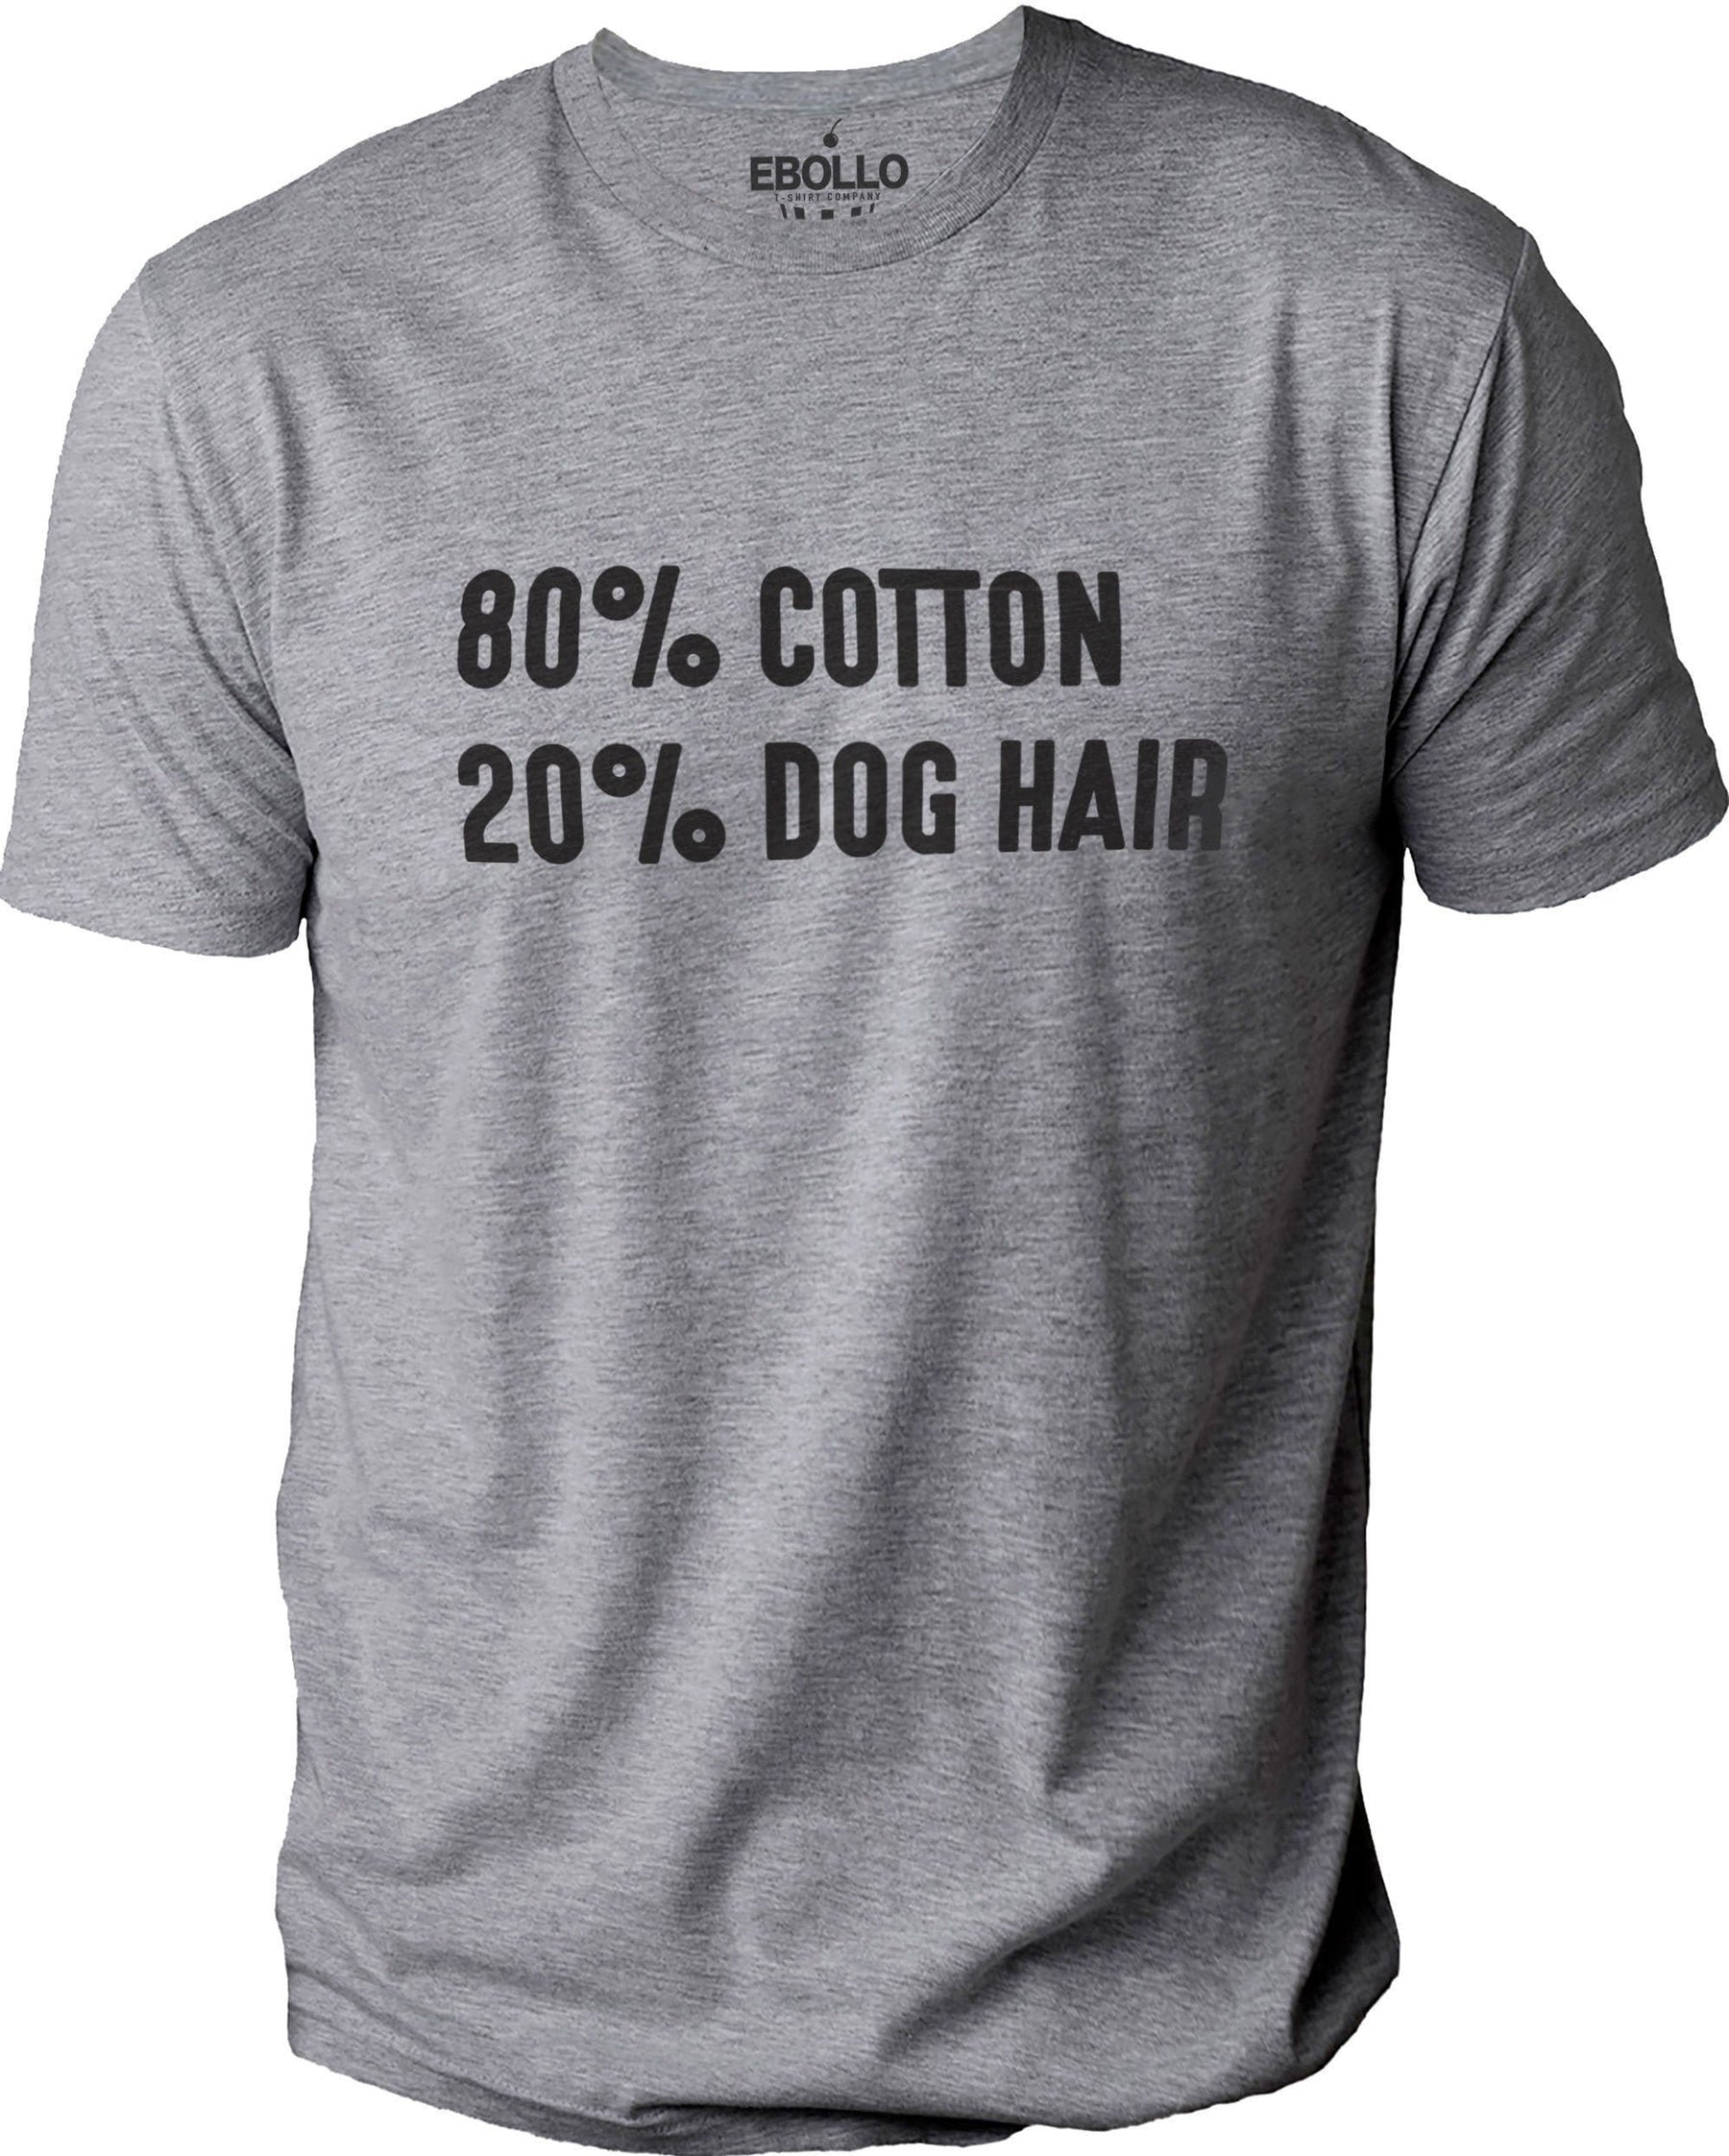 kage vinder Smitsom Funny Dog Shirt | 80% Cotton 20p Dog Hair Shirt - Fathers Day Gift - Dog  Lovers shirt - Dog Shirt for Women - Dog Mom Shirt - Dog T shirts |  eBollo.com